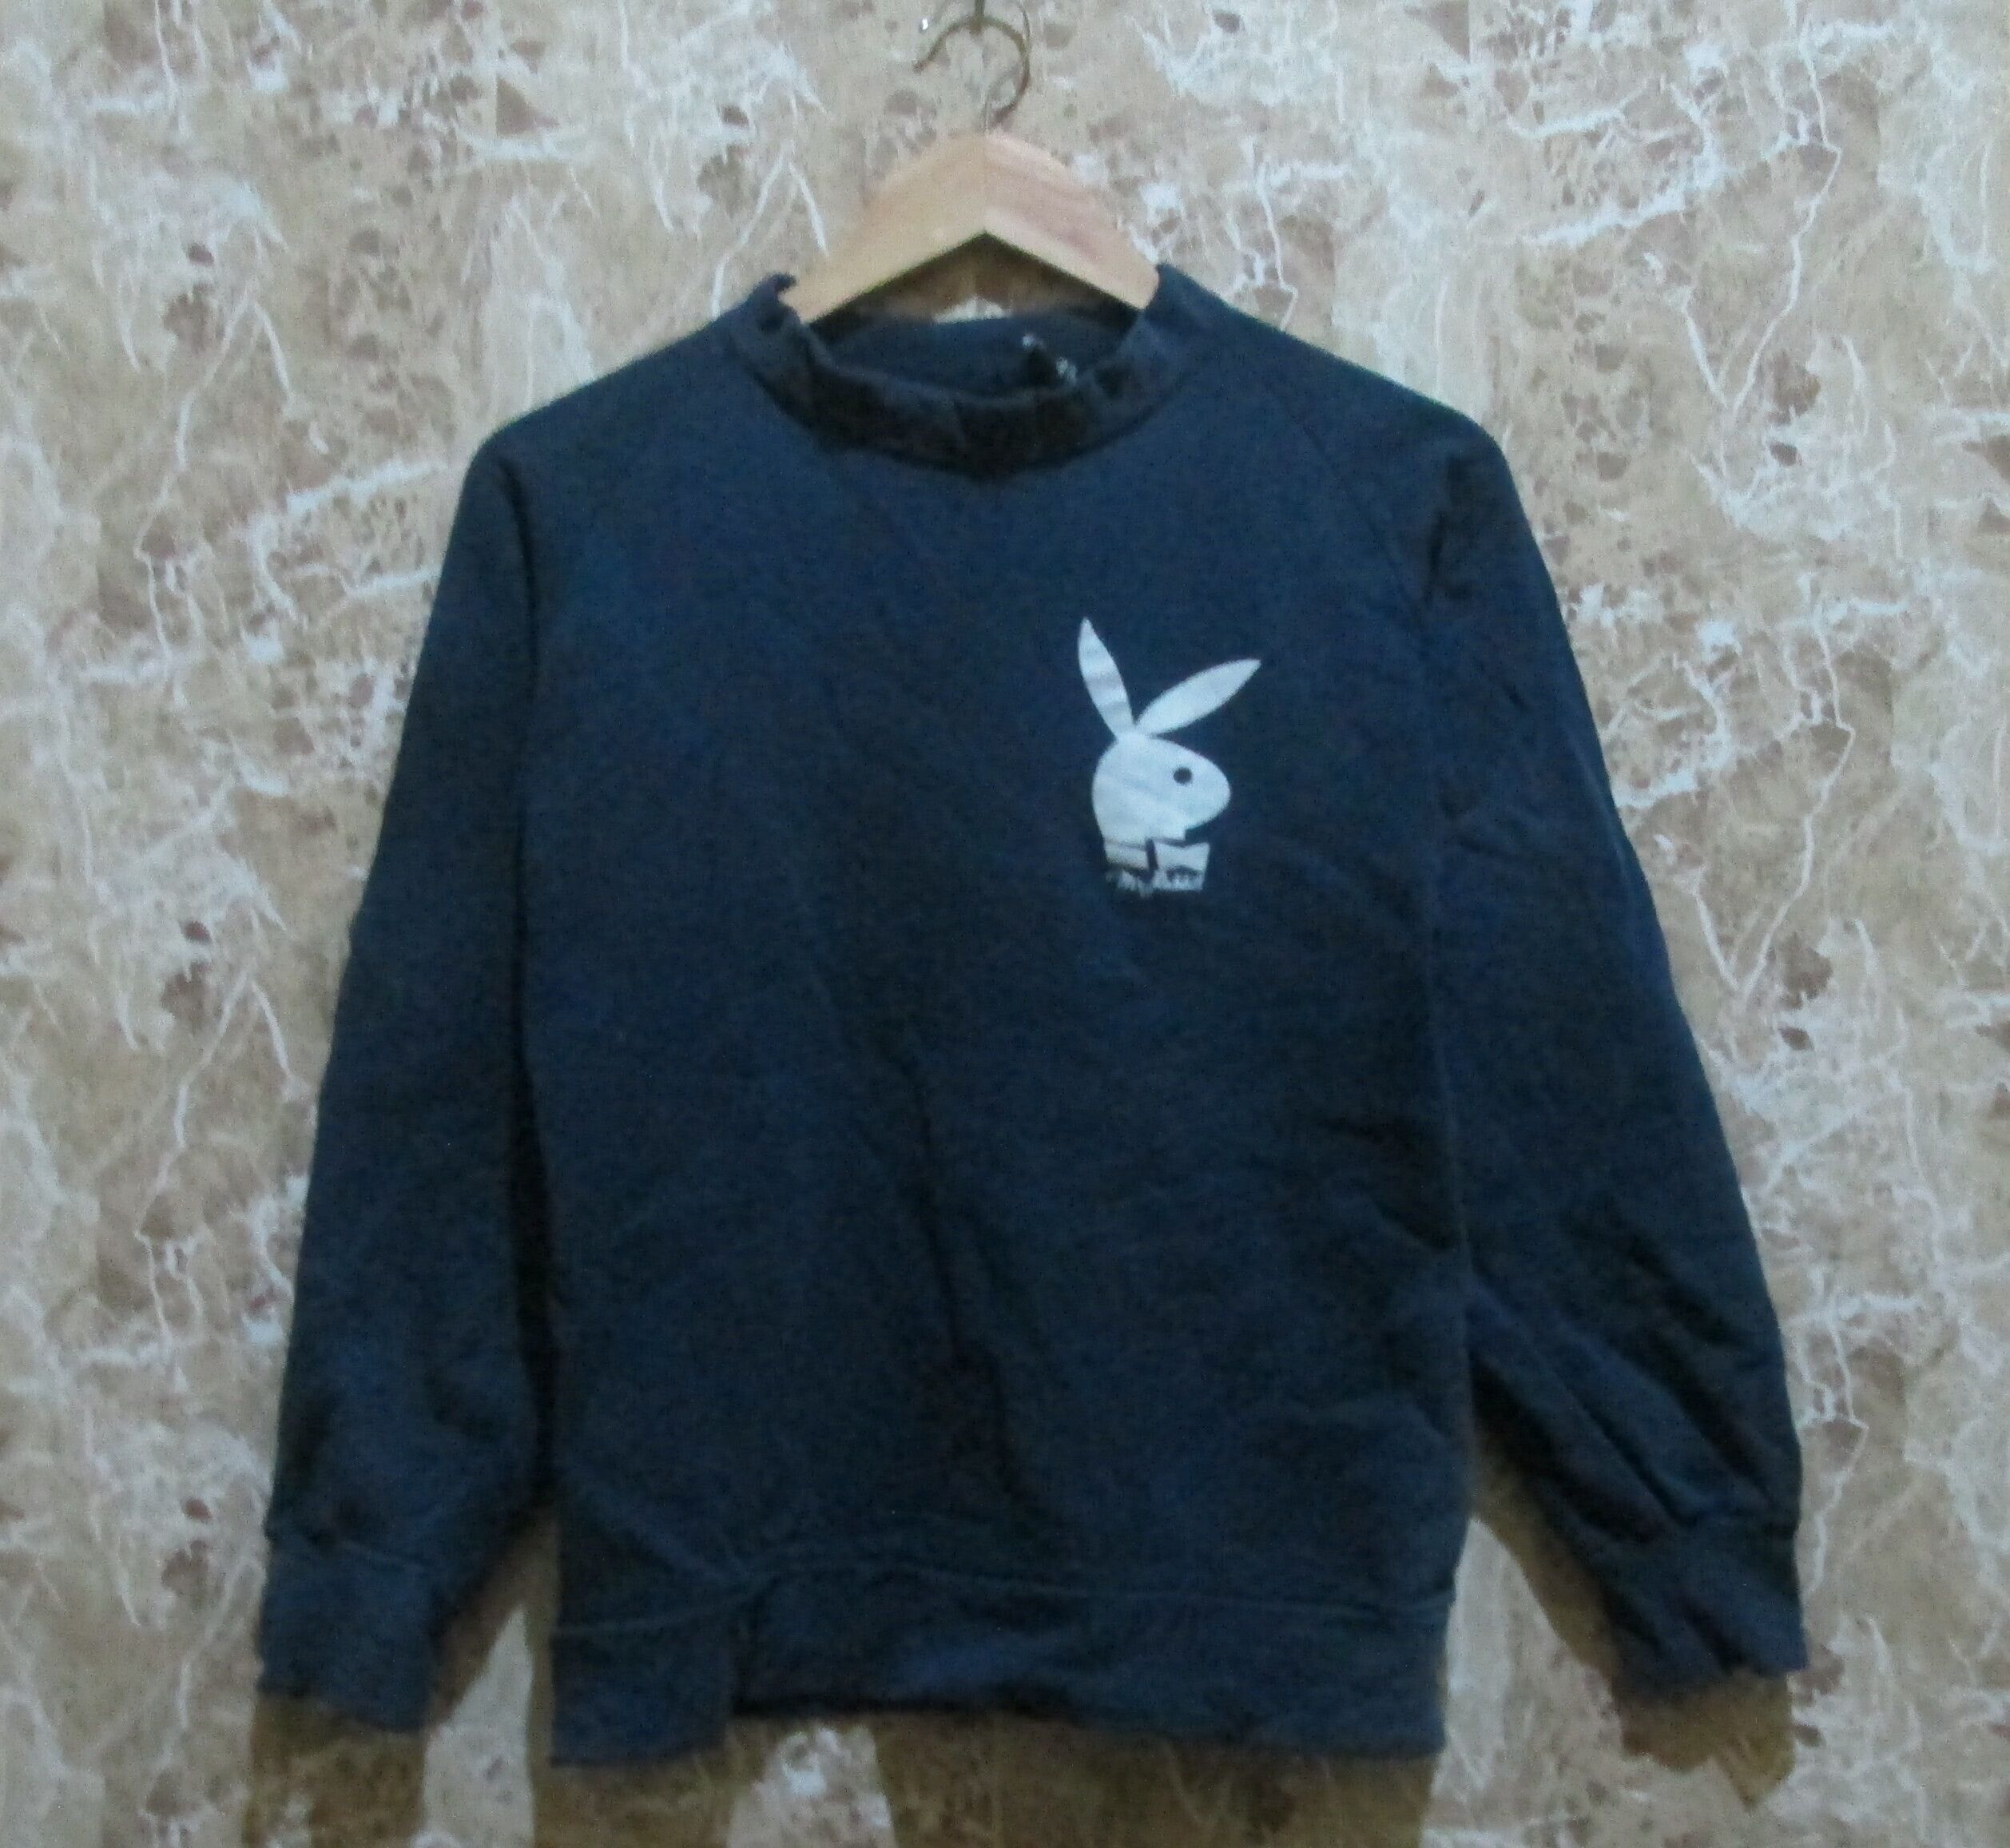 Vintage Playboy Mr. Rabbit Big Logo Rare Spellout Sweatshirt Size US M / EU 48-50 / 2 - 1 Preview